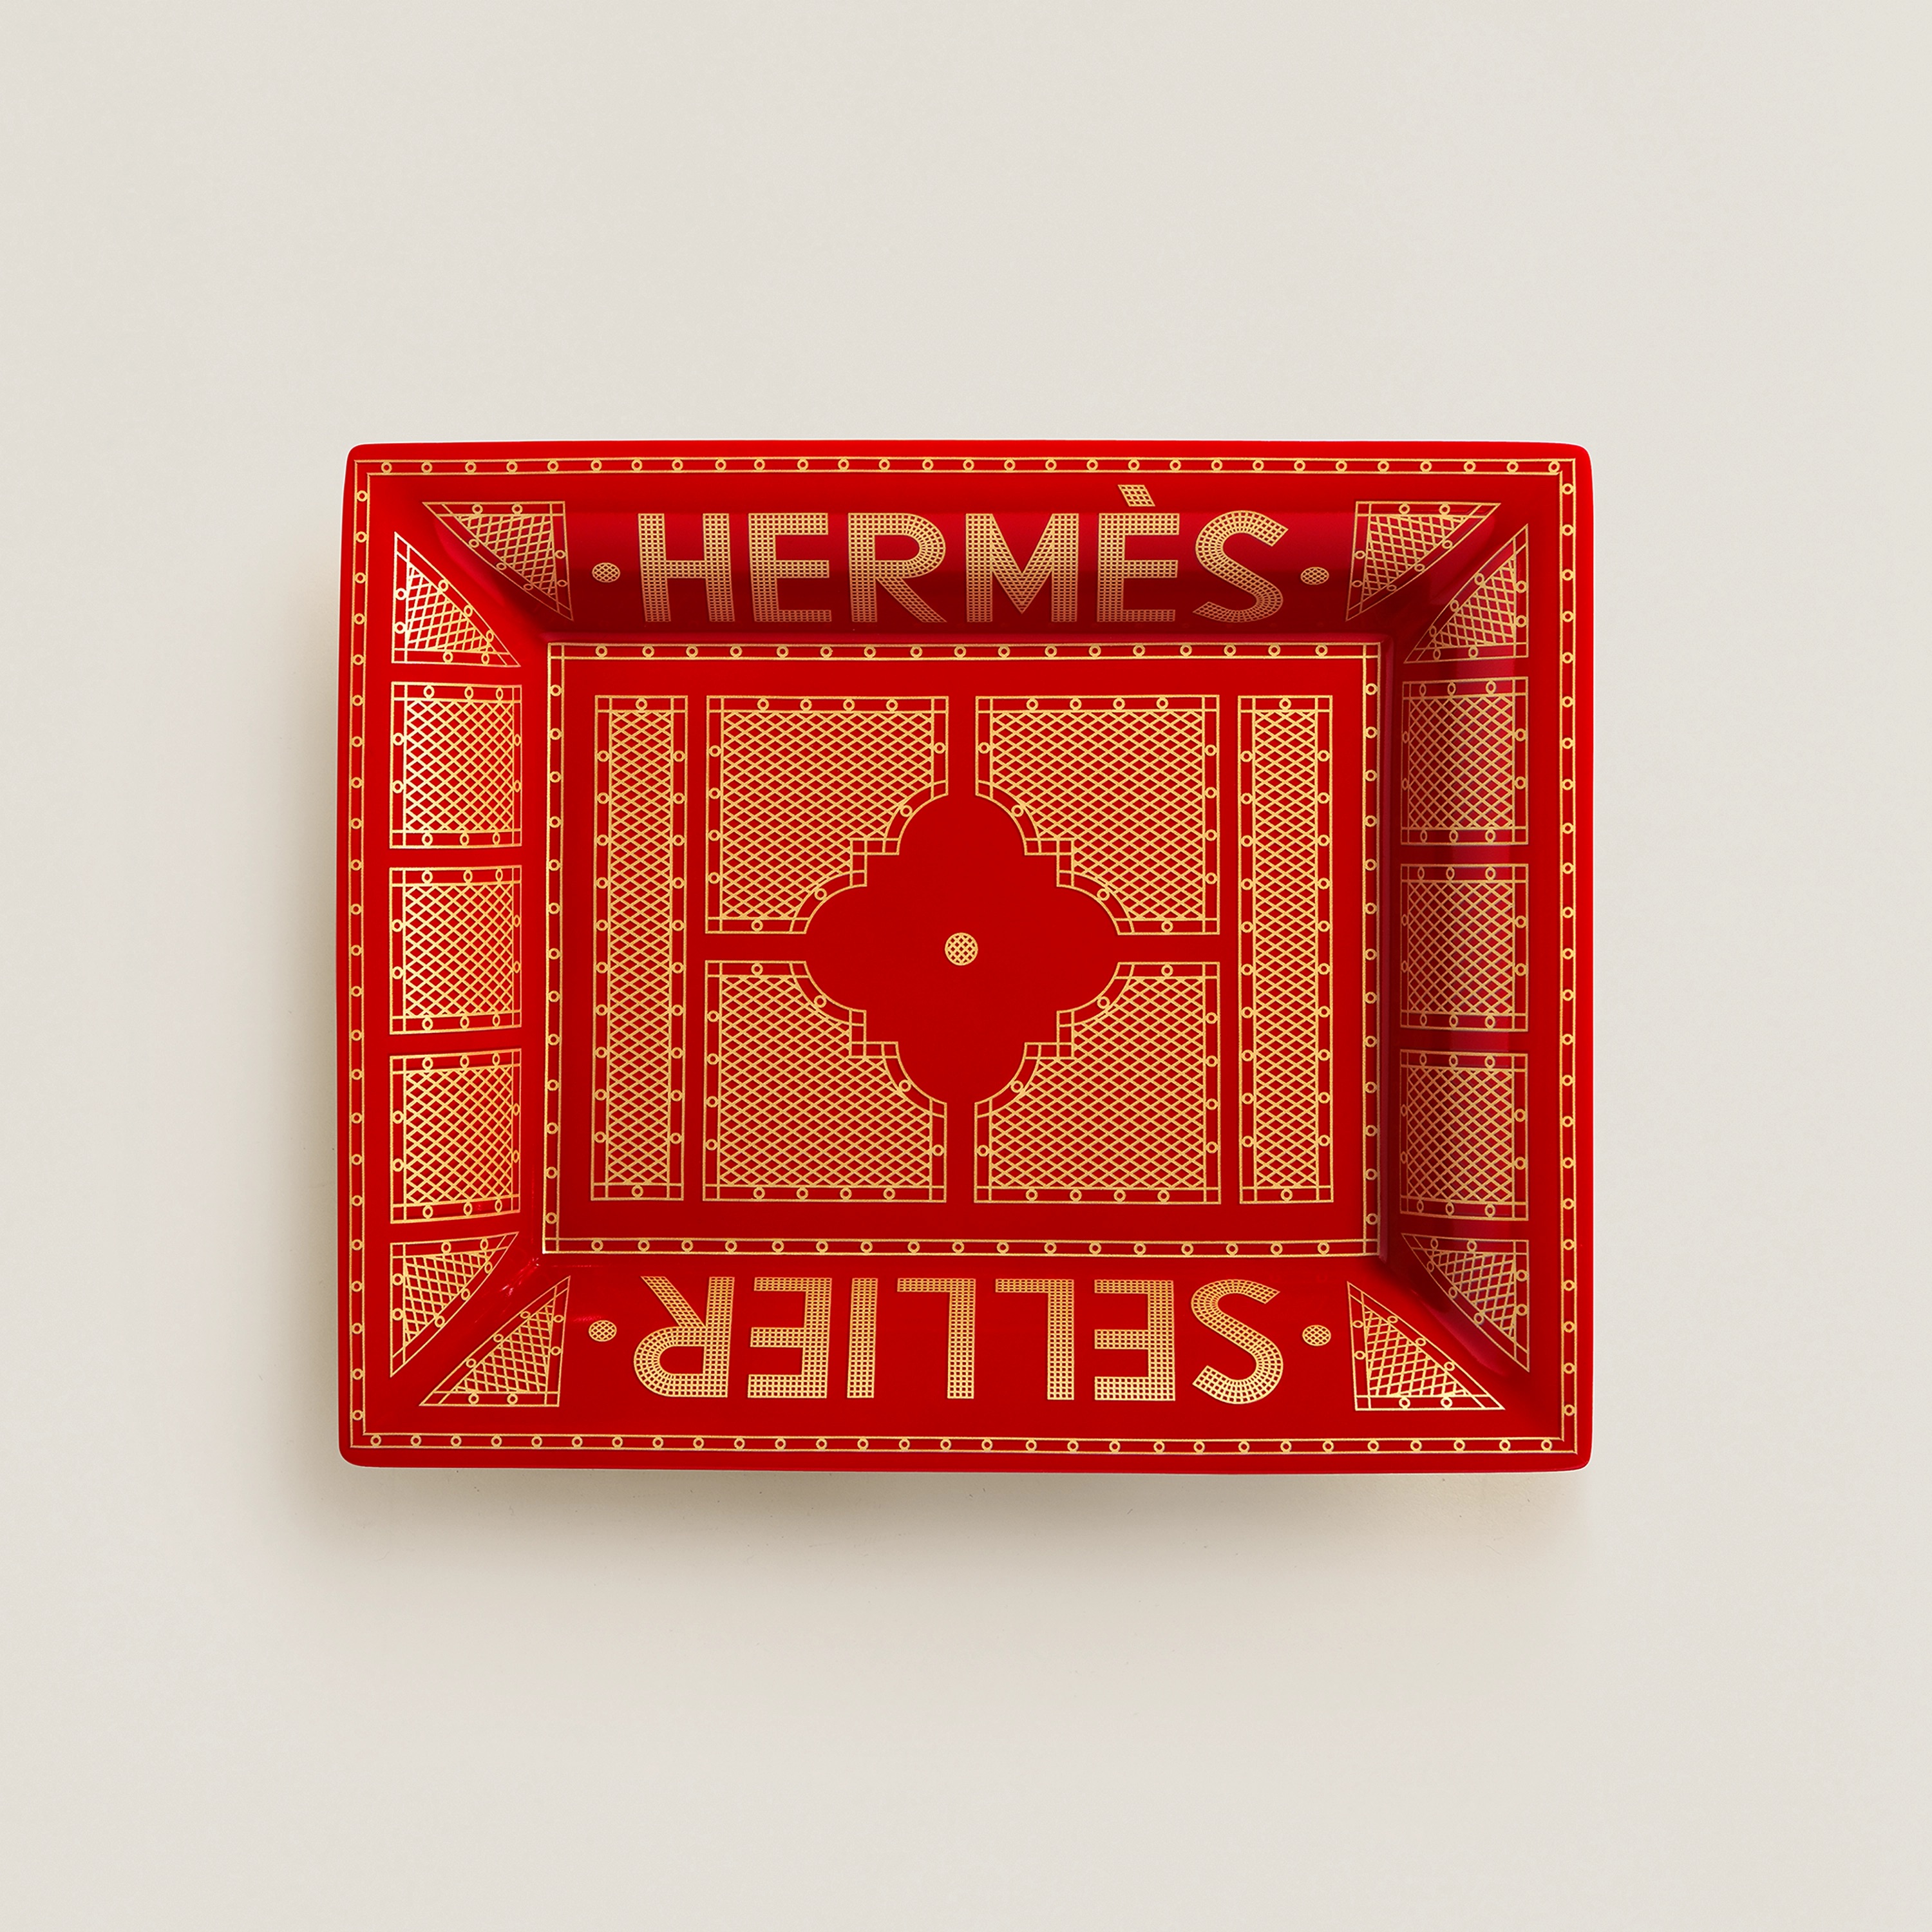 Hermès Sellier change tray in porcelain. Measures 8.3" long x 6.7" wide, $660. Photo via Hermès.com.